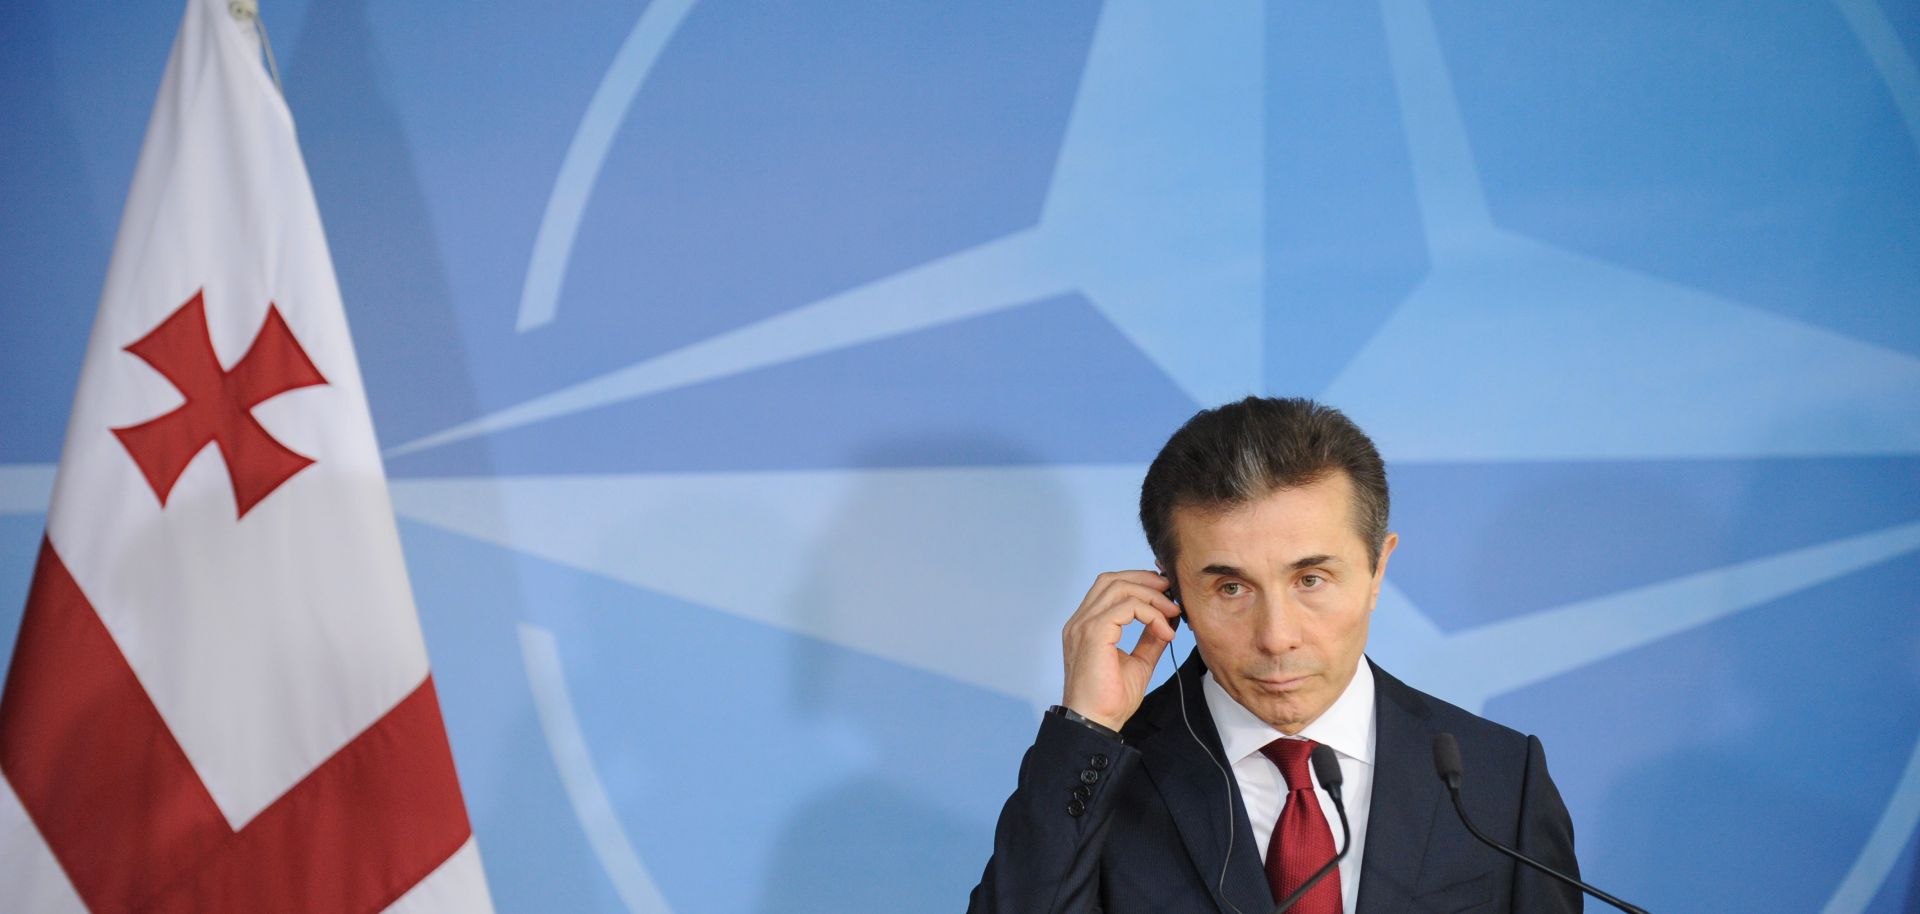 Georgia's Prime minister Bidzina Ivanishvili speaks during a press conference.